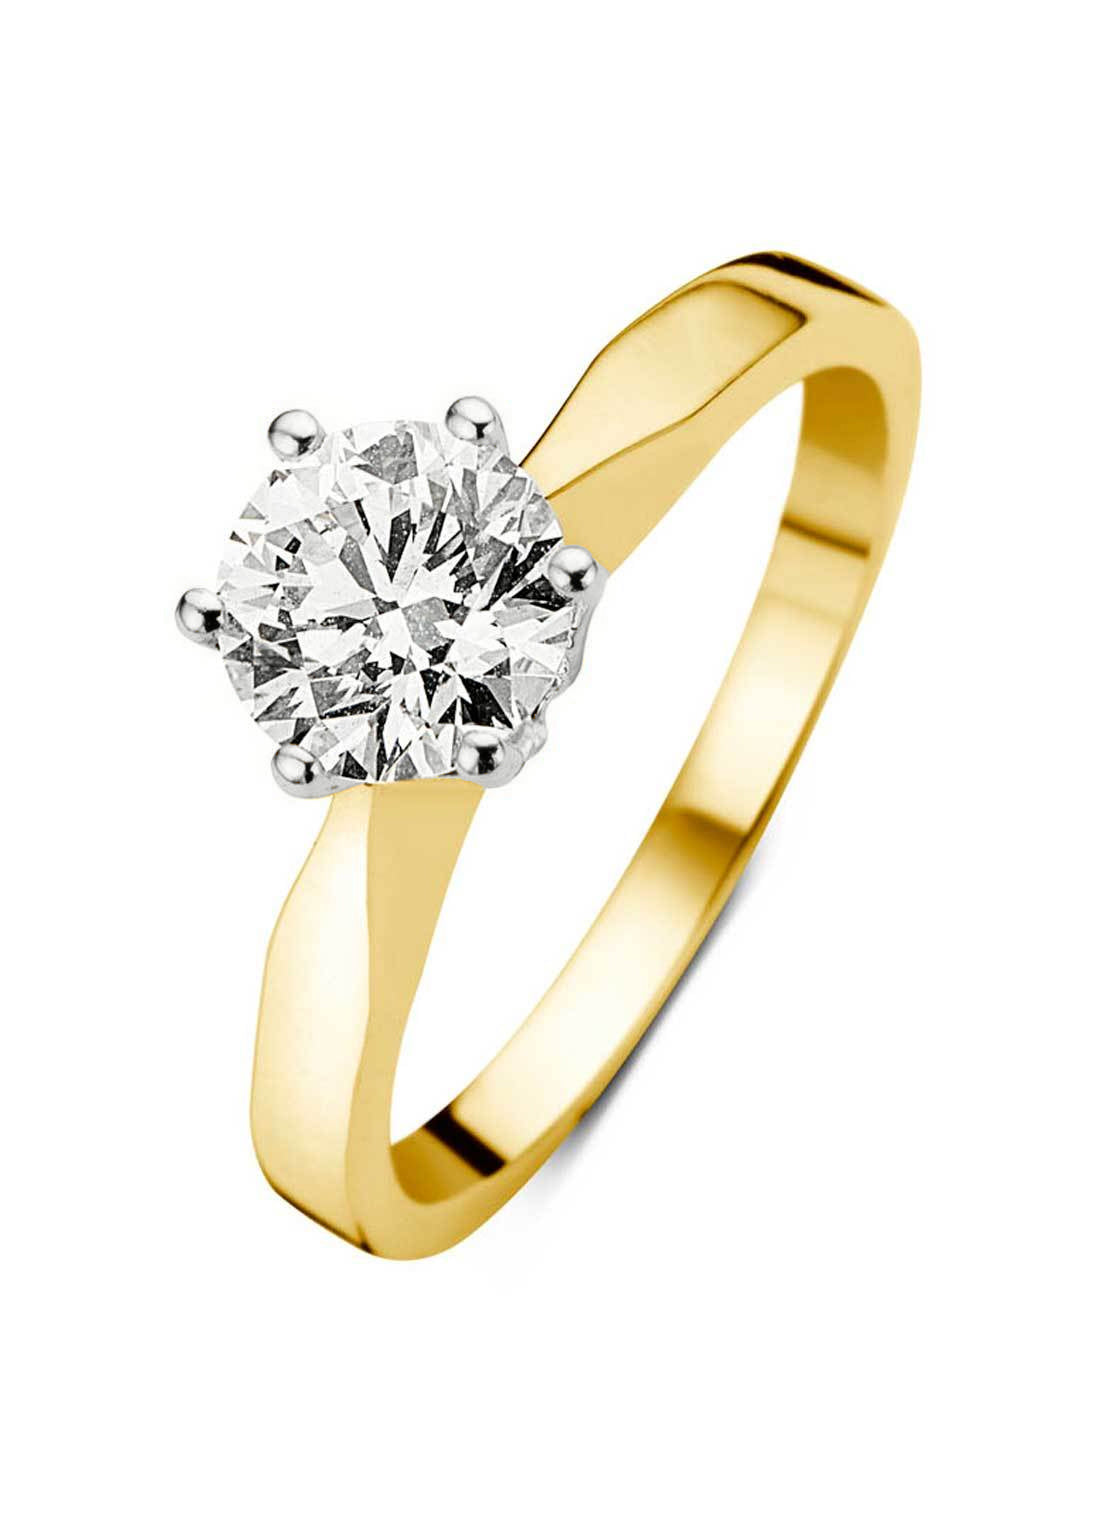 Yellow gold ring, 1.51 ct diamond, solitary